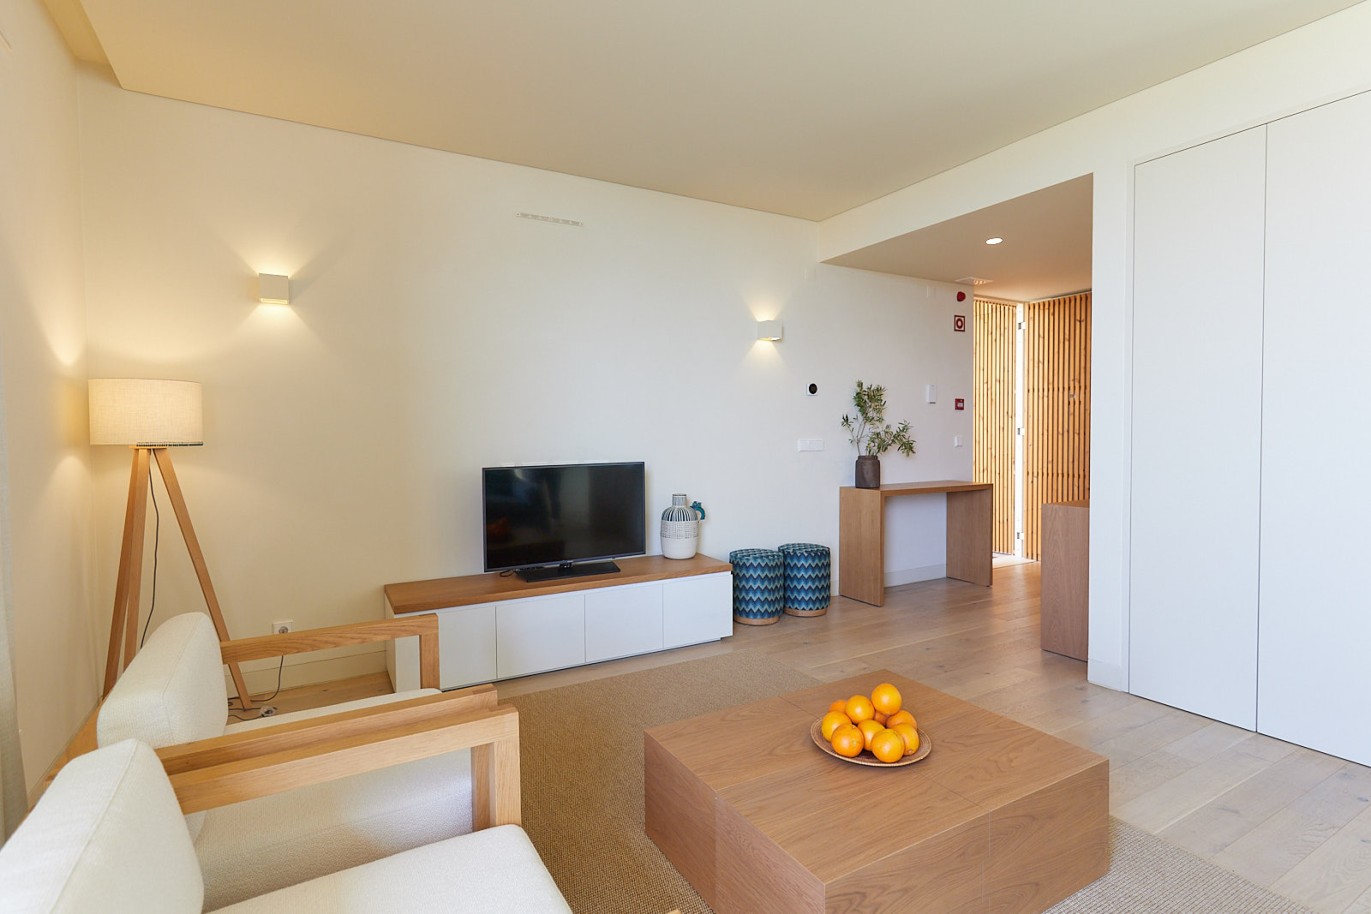 2 bedroom apartment in resort, for sale in Porches, Algarve_228837